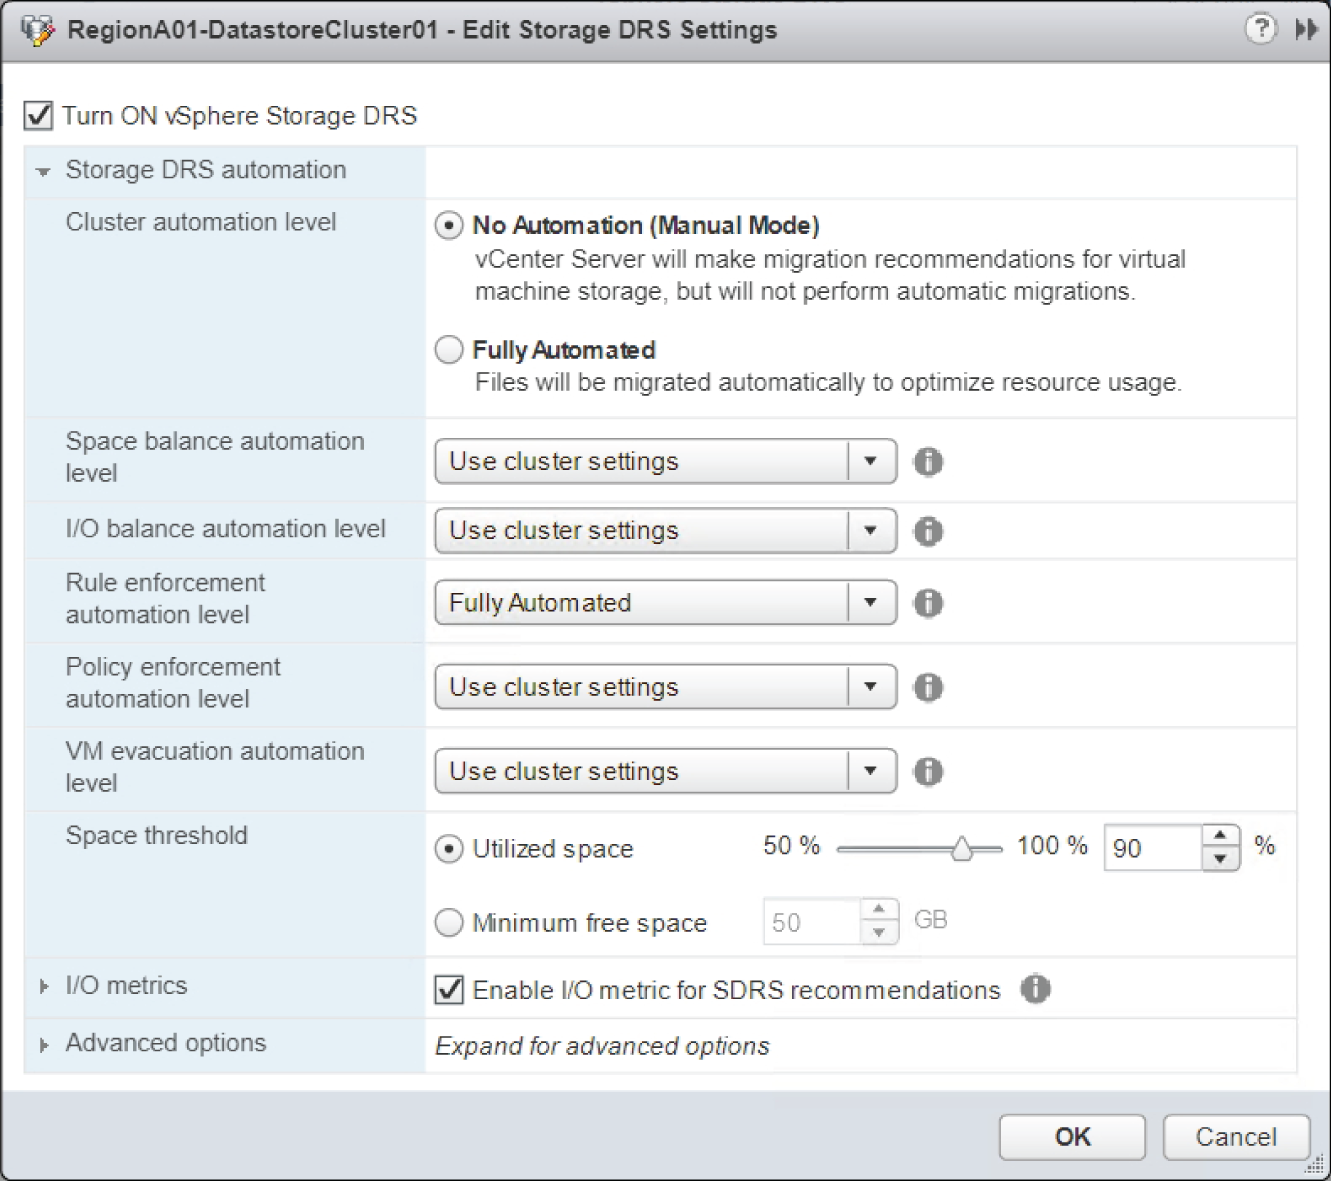 Snapshot of Edit Storage DRS settings screen.